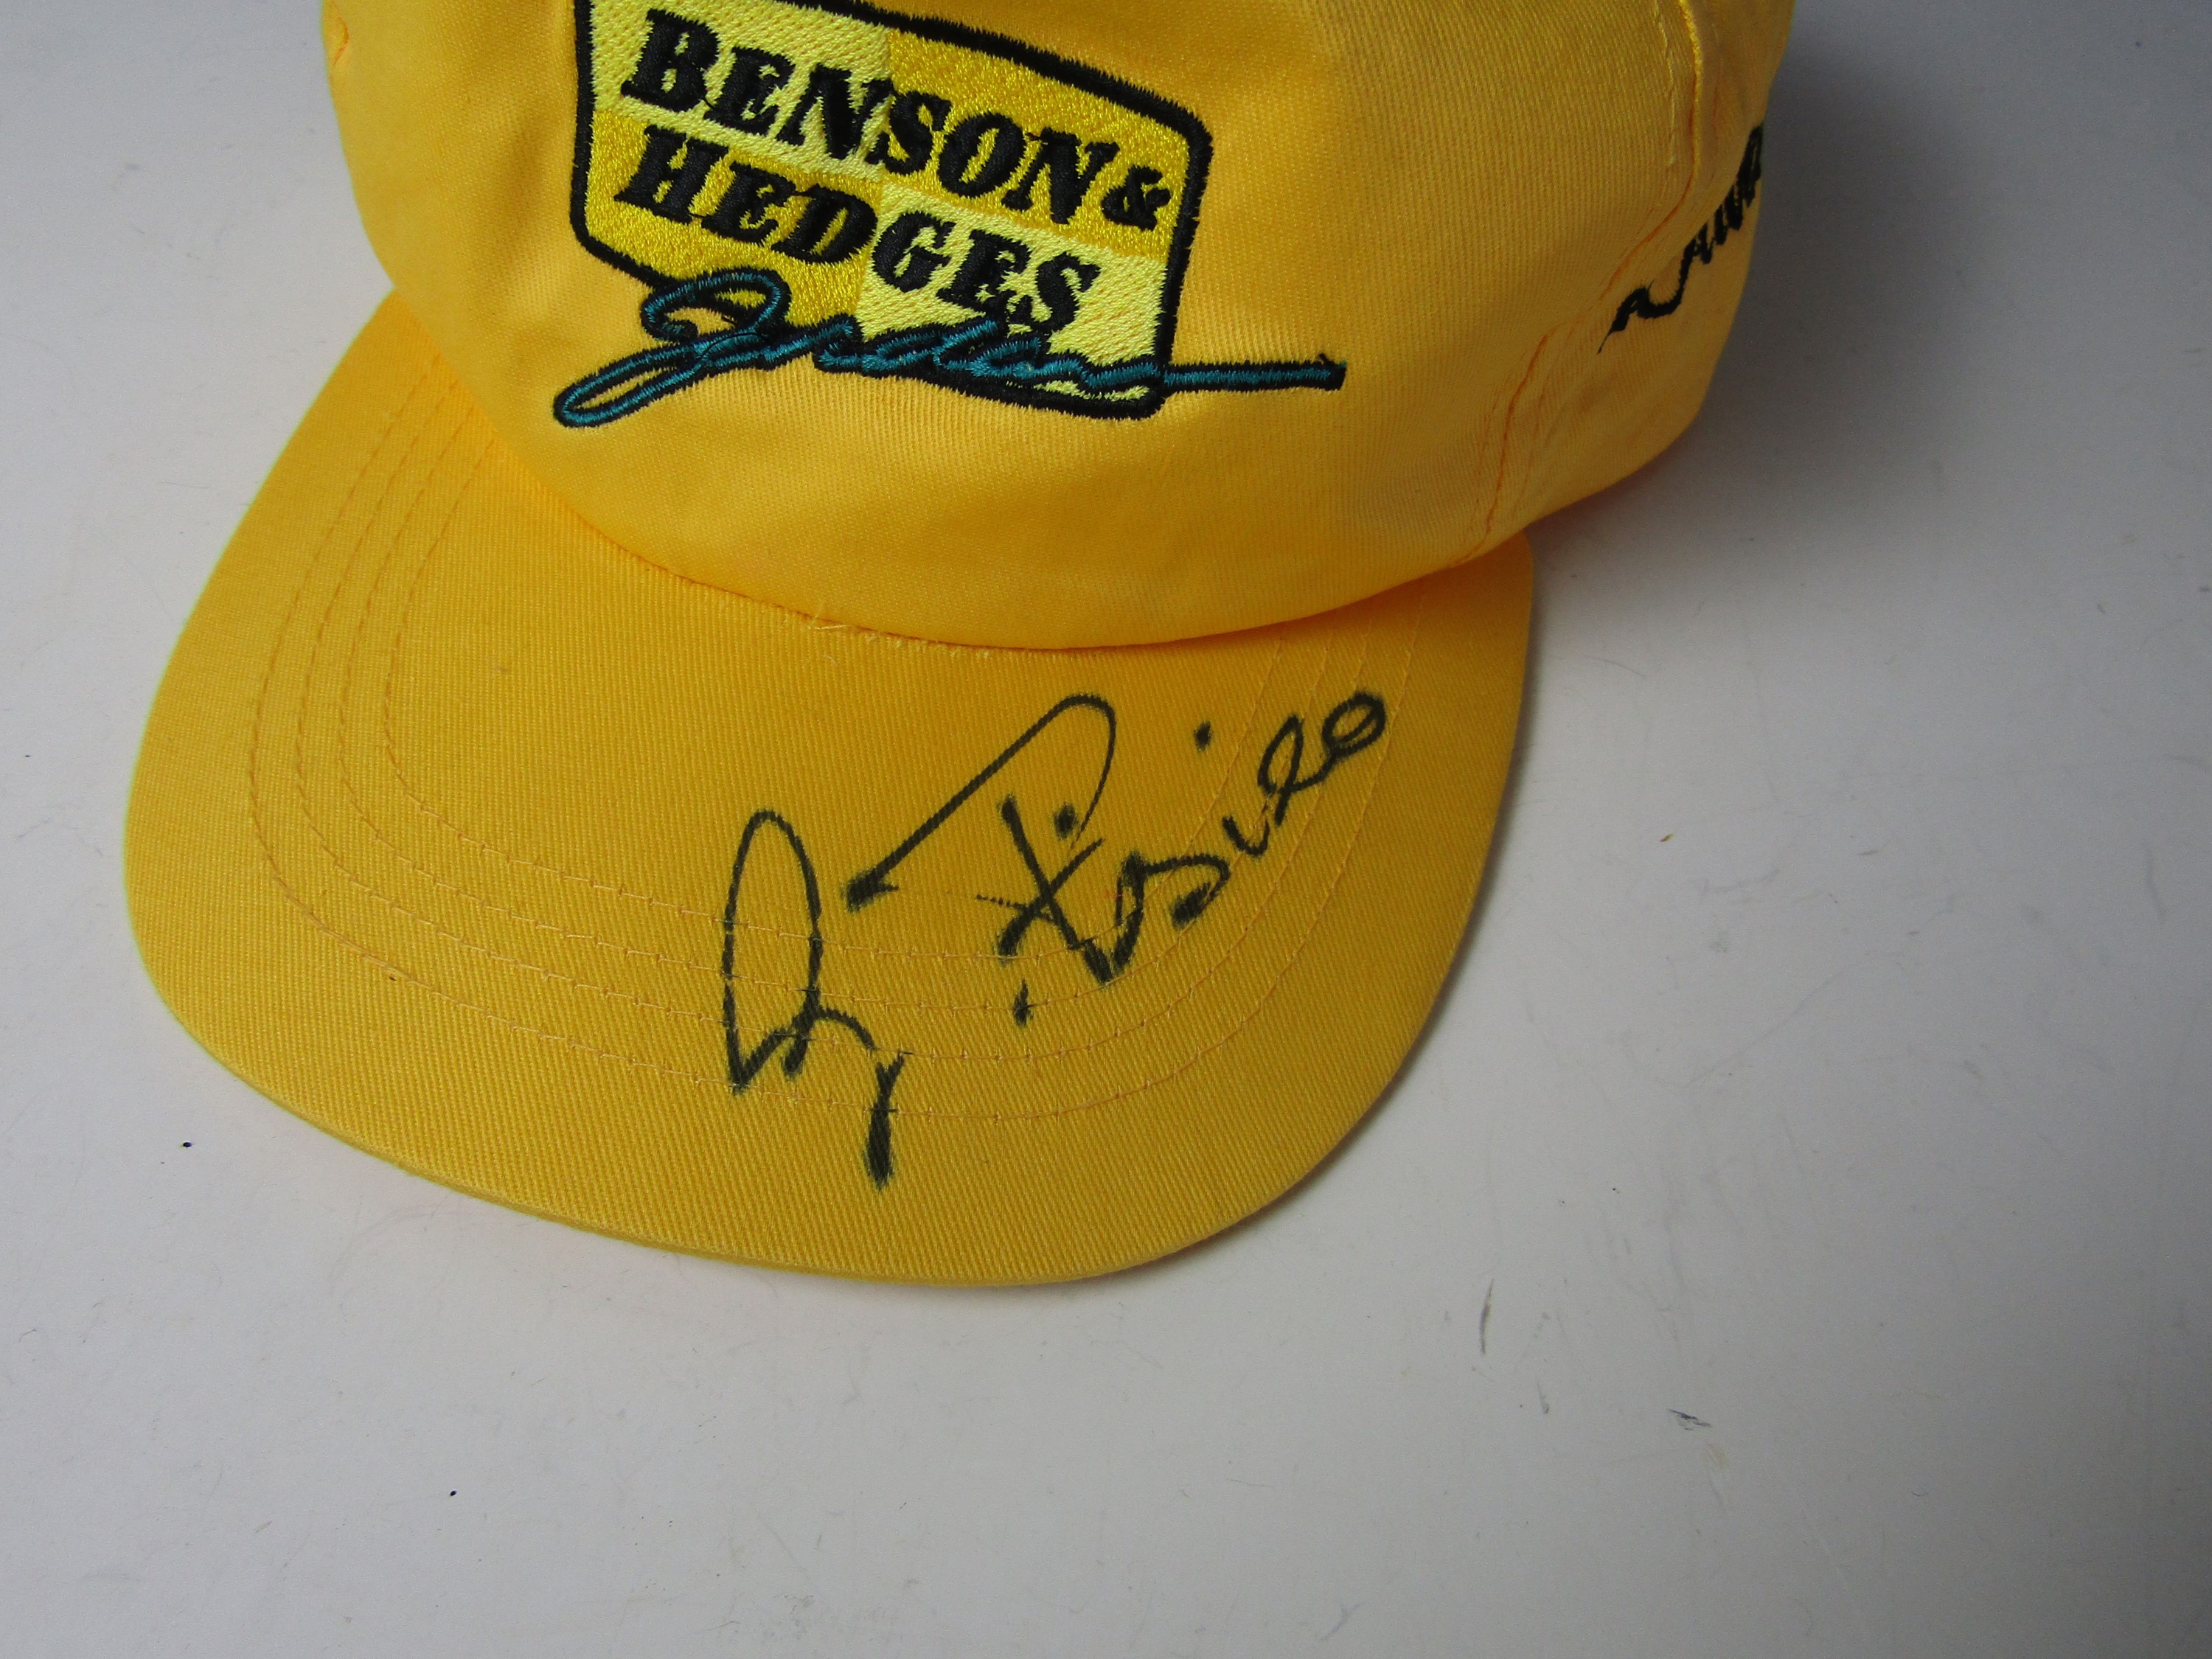 A Formula 1 Jordan baseball cap signed by Giancarlo Fisichella - Image 2 of 2